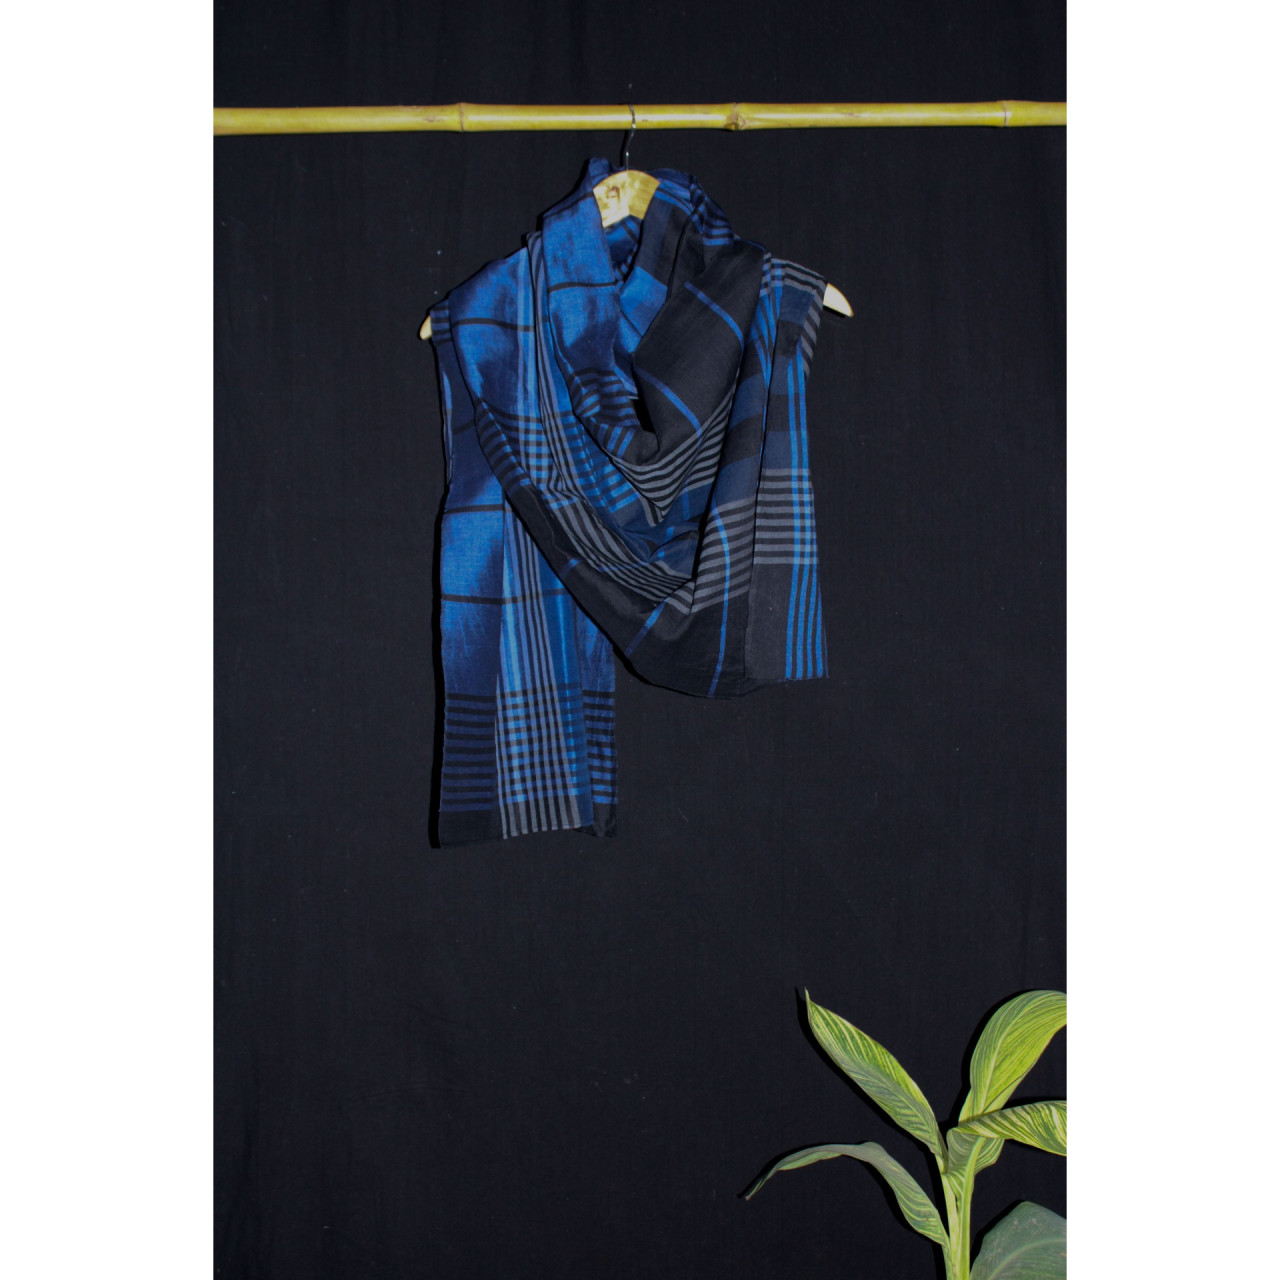 (2159) Khadi  and linen Azo-free dyed stole from Shantipur - Indigo, black, blue, stripes, checks